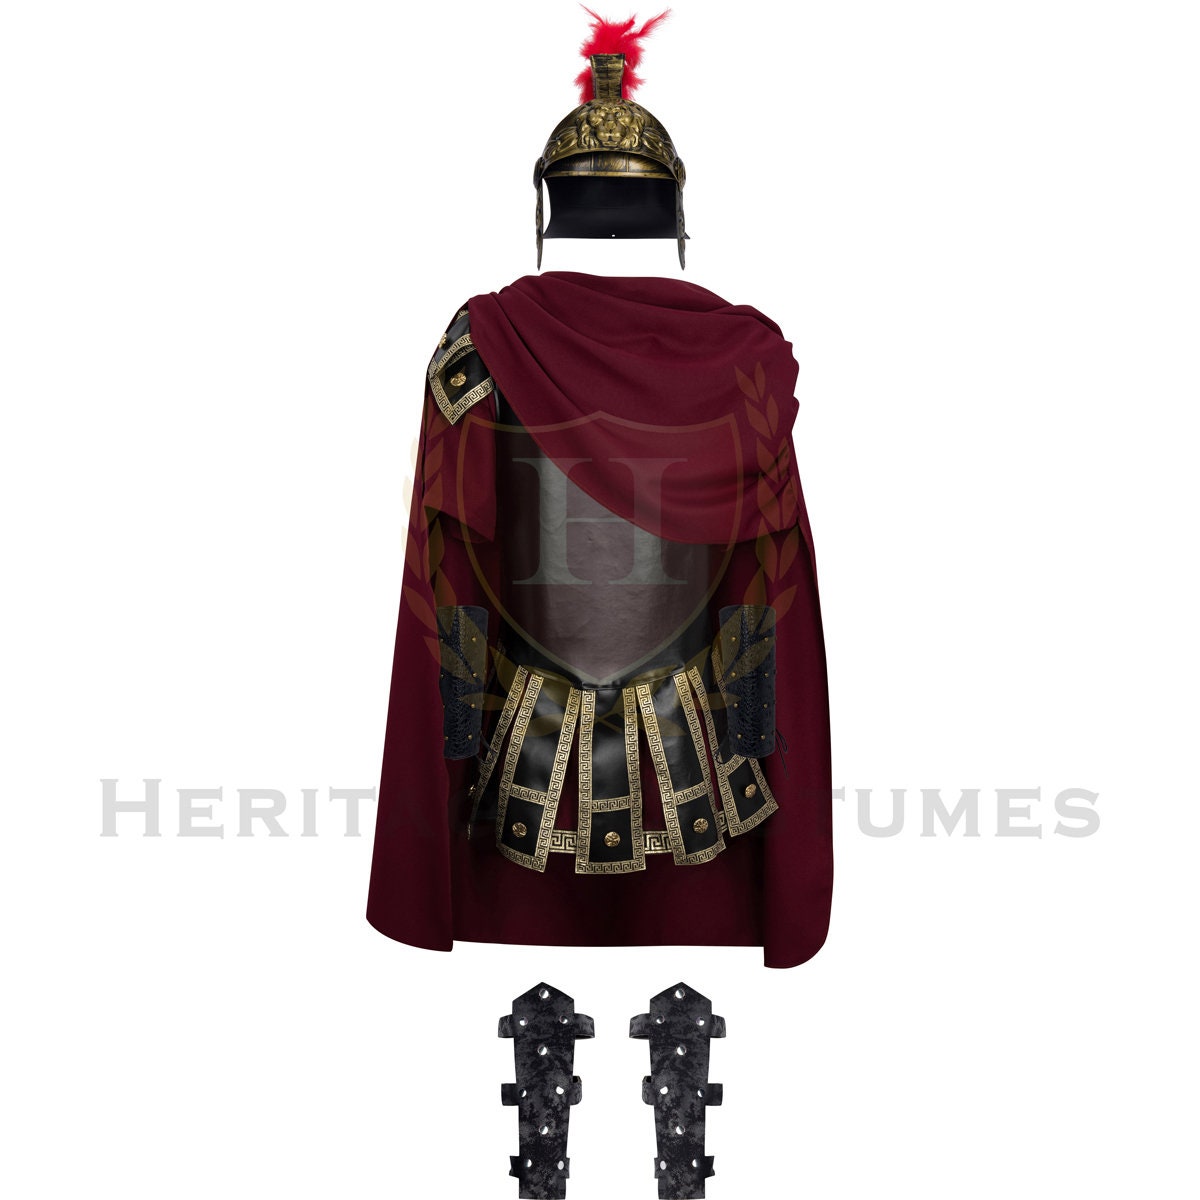 Roman Military Costume, Roman Armor, Roman Legionary Attire